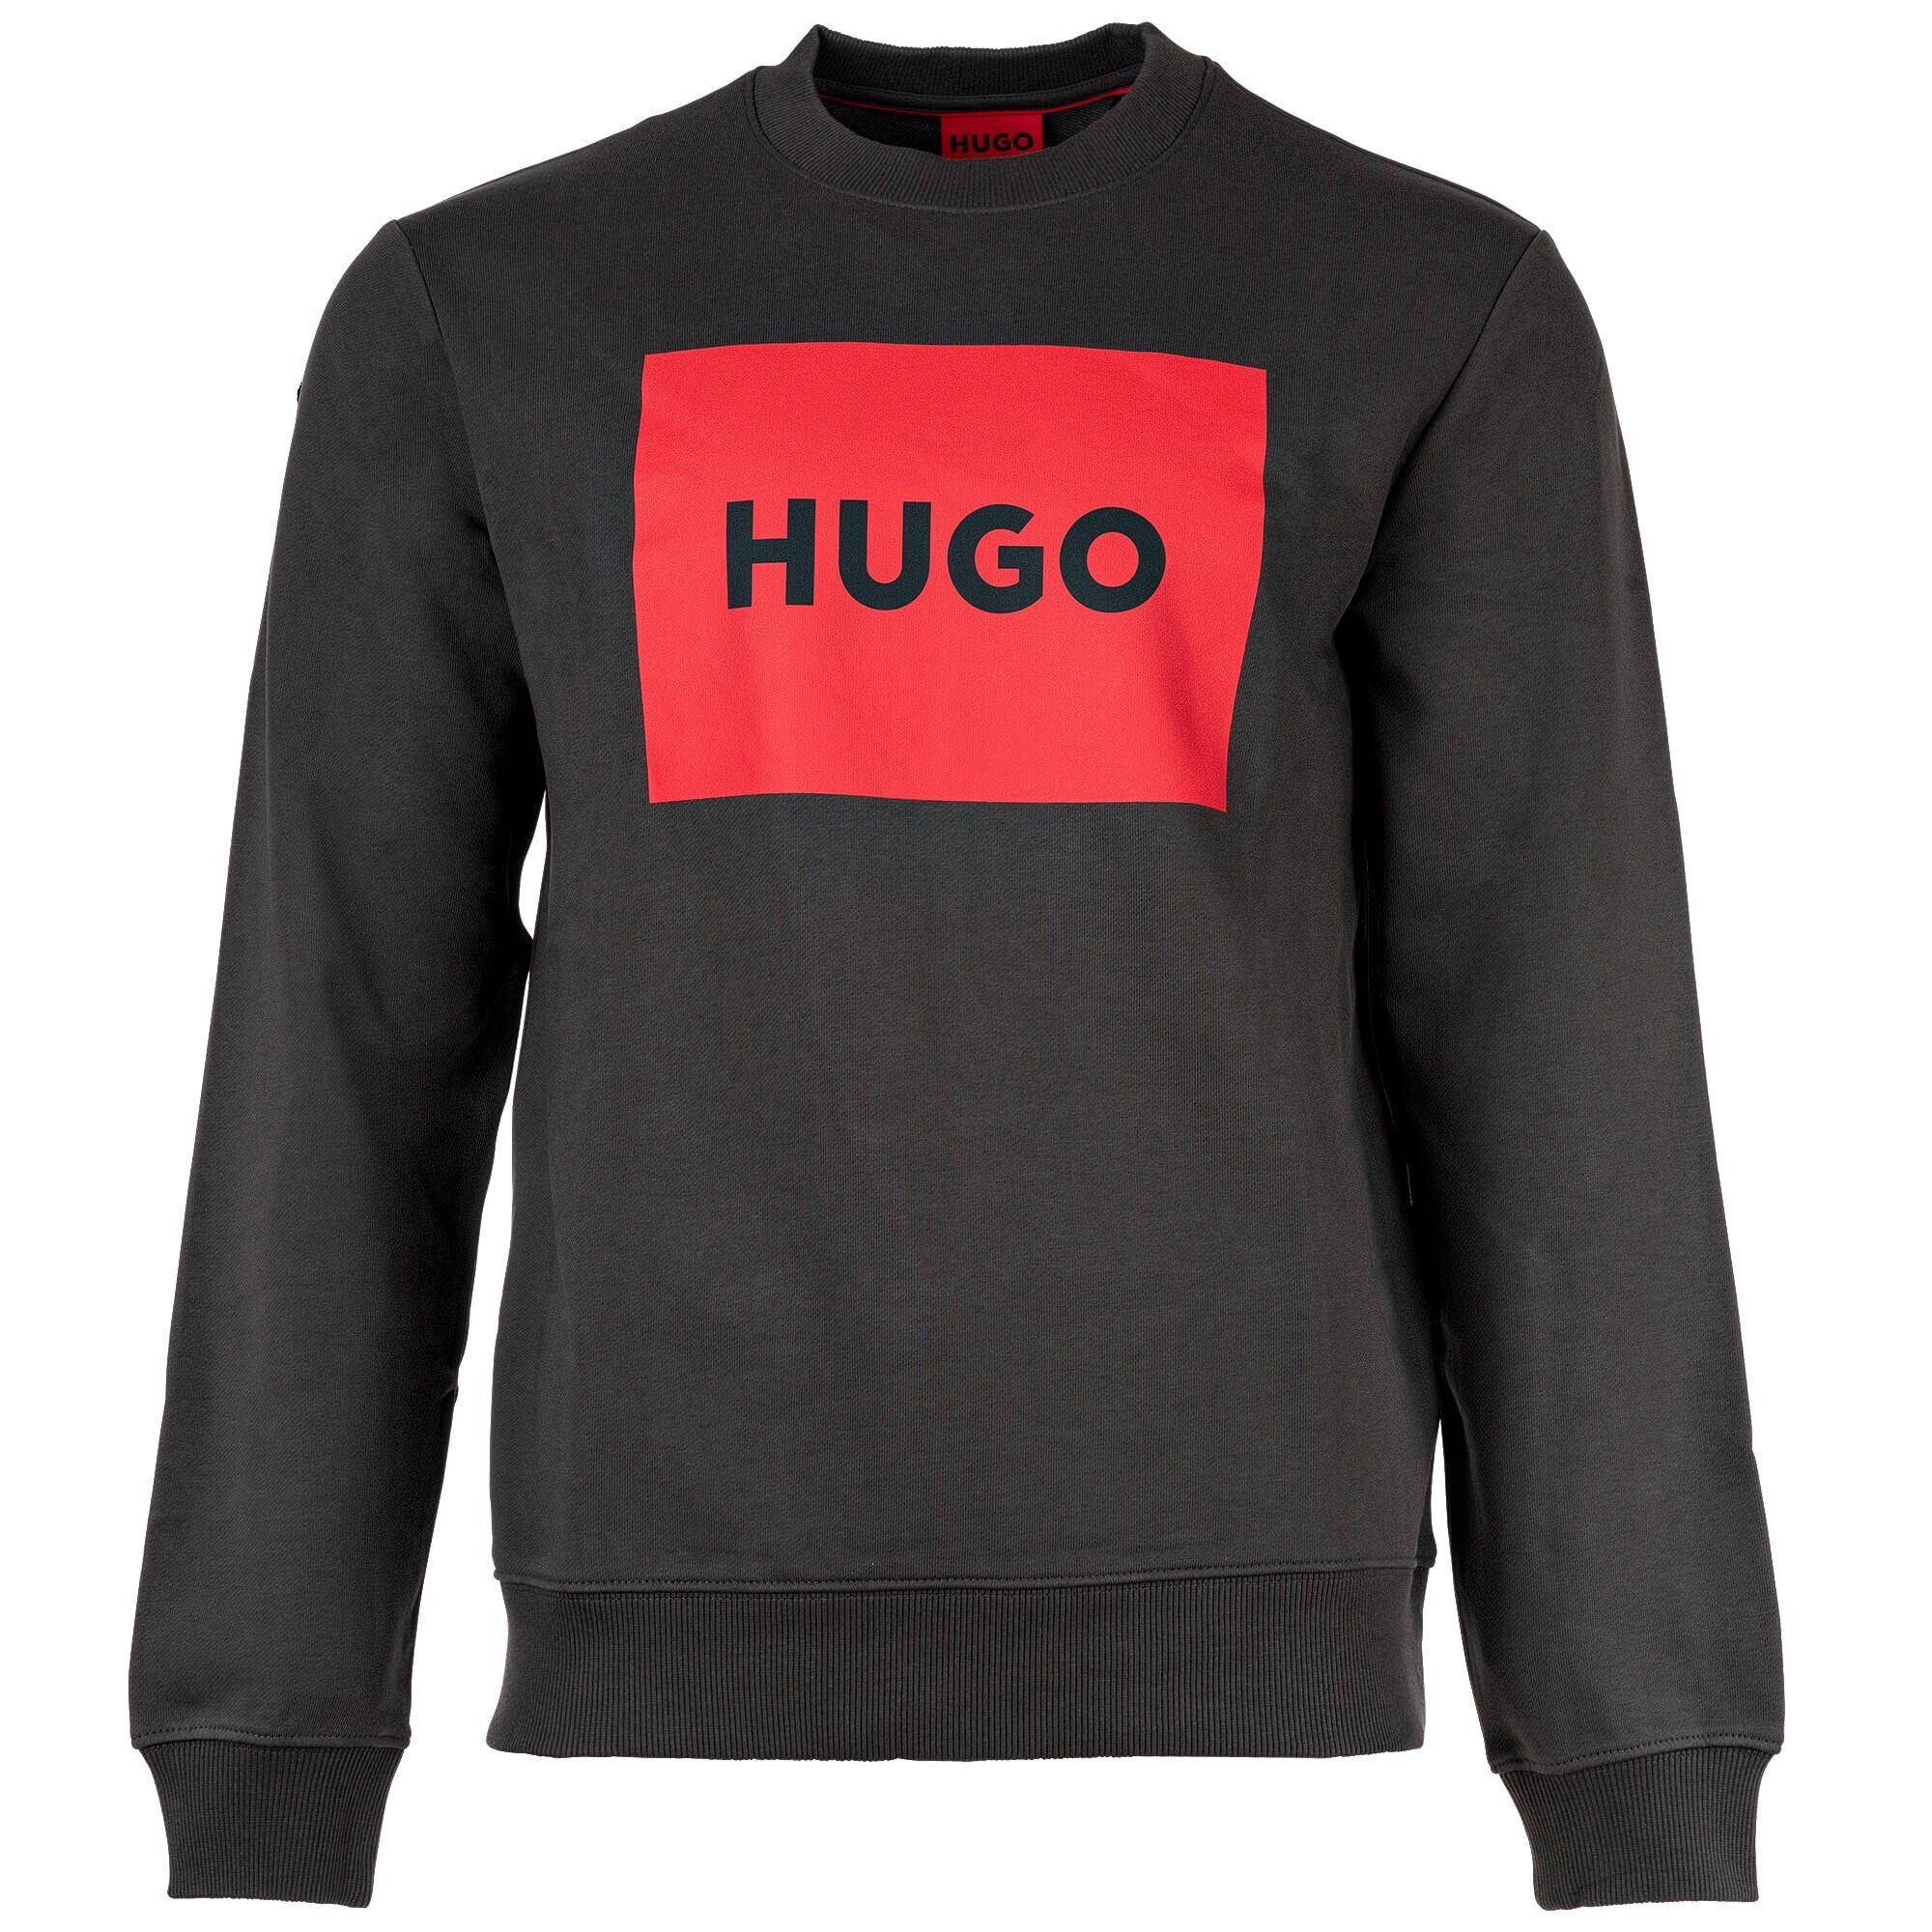 HUGO Sweatshirt Herren Sweater - Duragol222, Sweatshirt, Rundhals Dunkelgrau